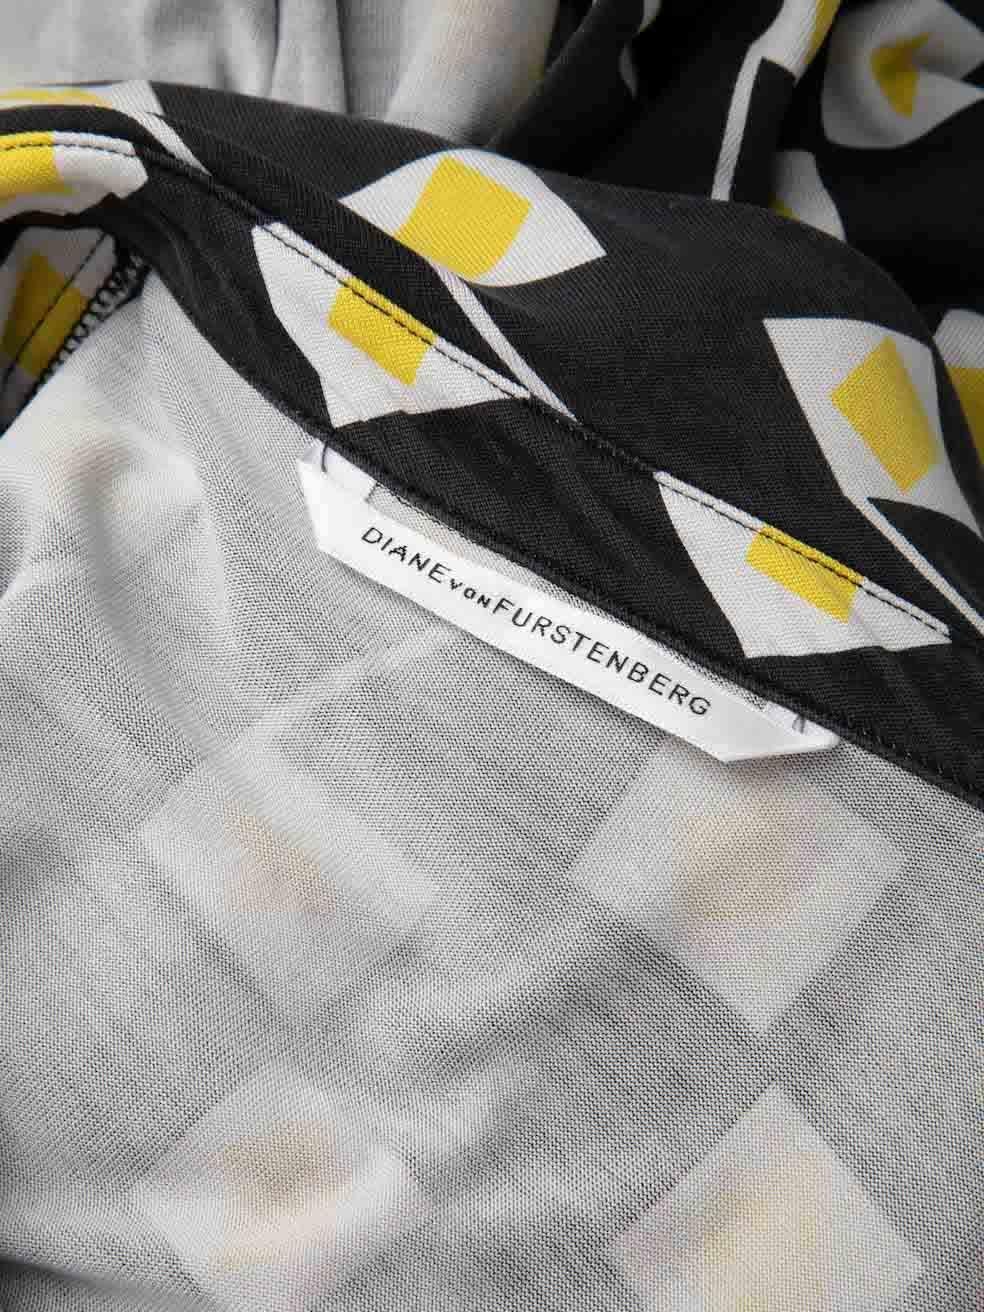 Diane Von Furstenberg Abstract Printed Wrap Dress Size M For Sale 2